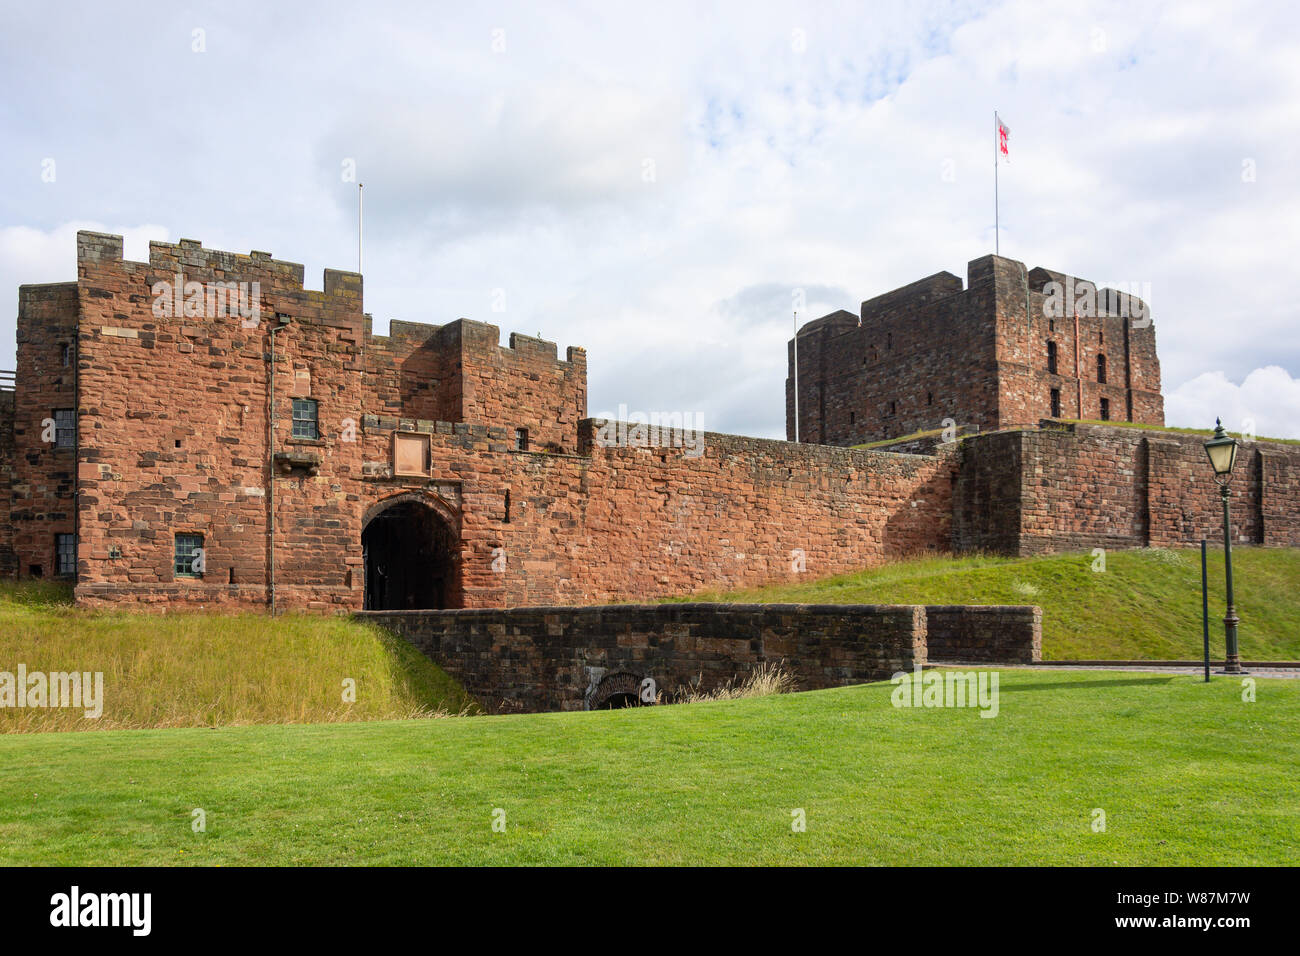 Tile Tower, entrance gate and walls of Carlisle Castle, Castle Street, Carlisle, City of Carlisle, Cumbria, England, United Kingdom Stock Photo